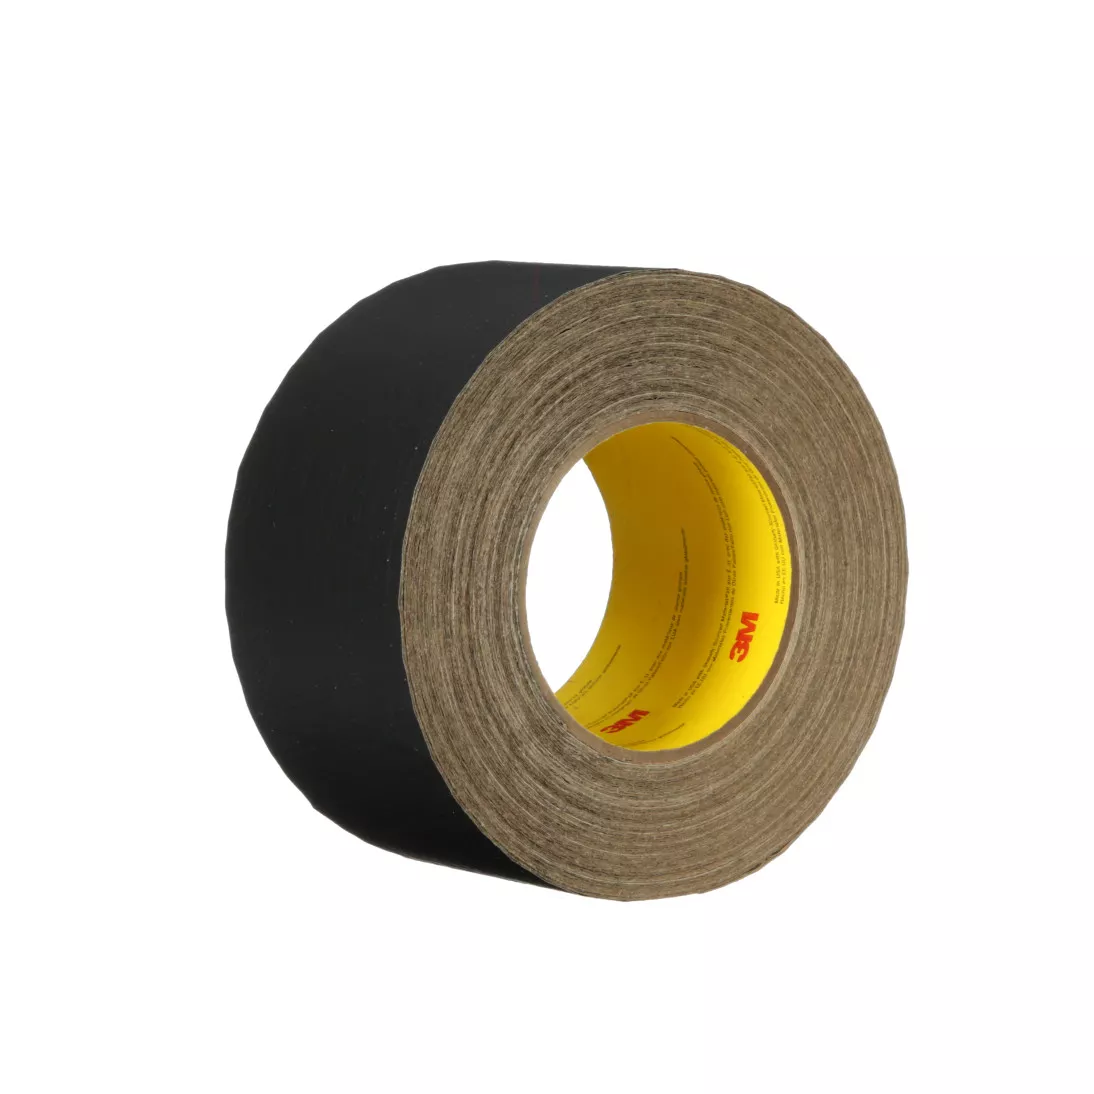 3M™ Venture Tape™ Metal Building Facing Tape 1537CW, Black, 72 mm x 45.7
m, 16 rolls per case